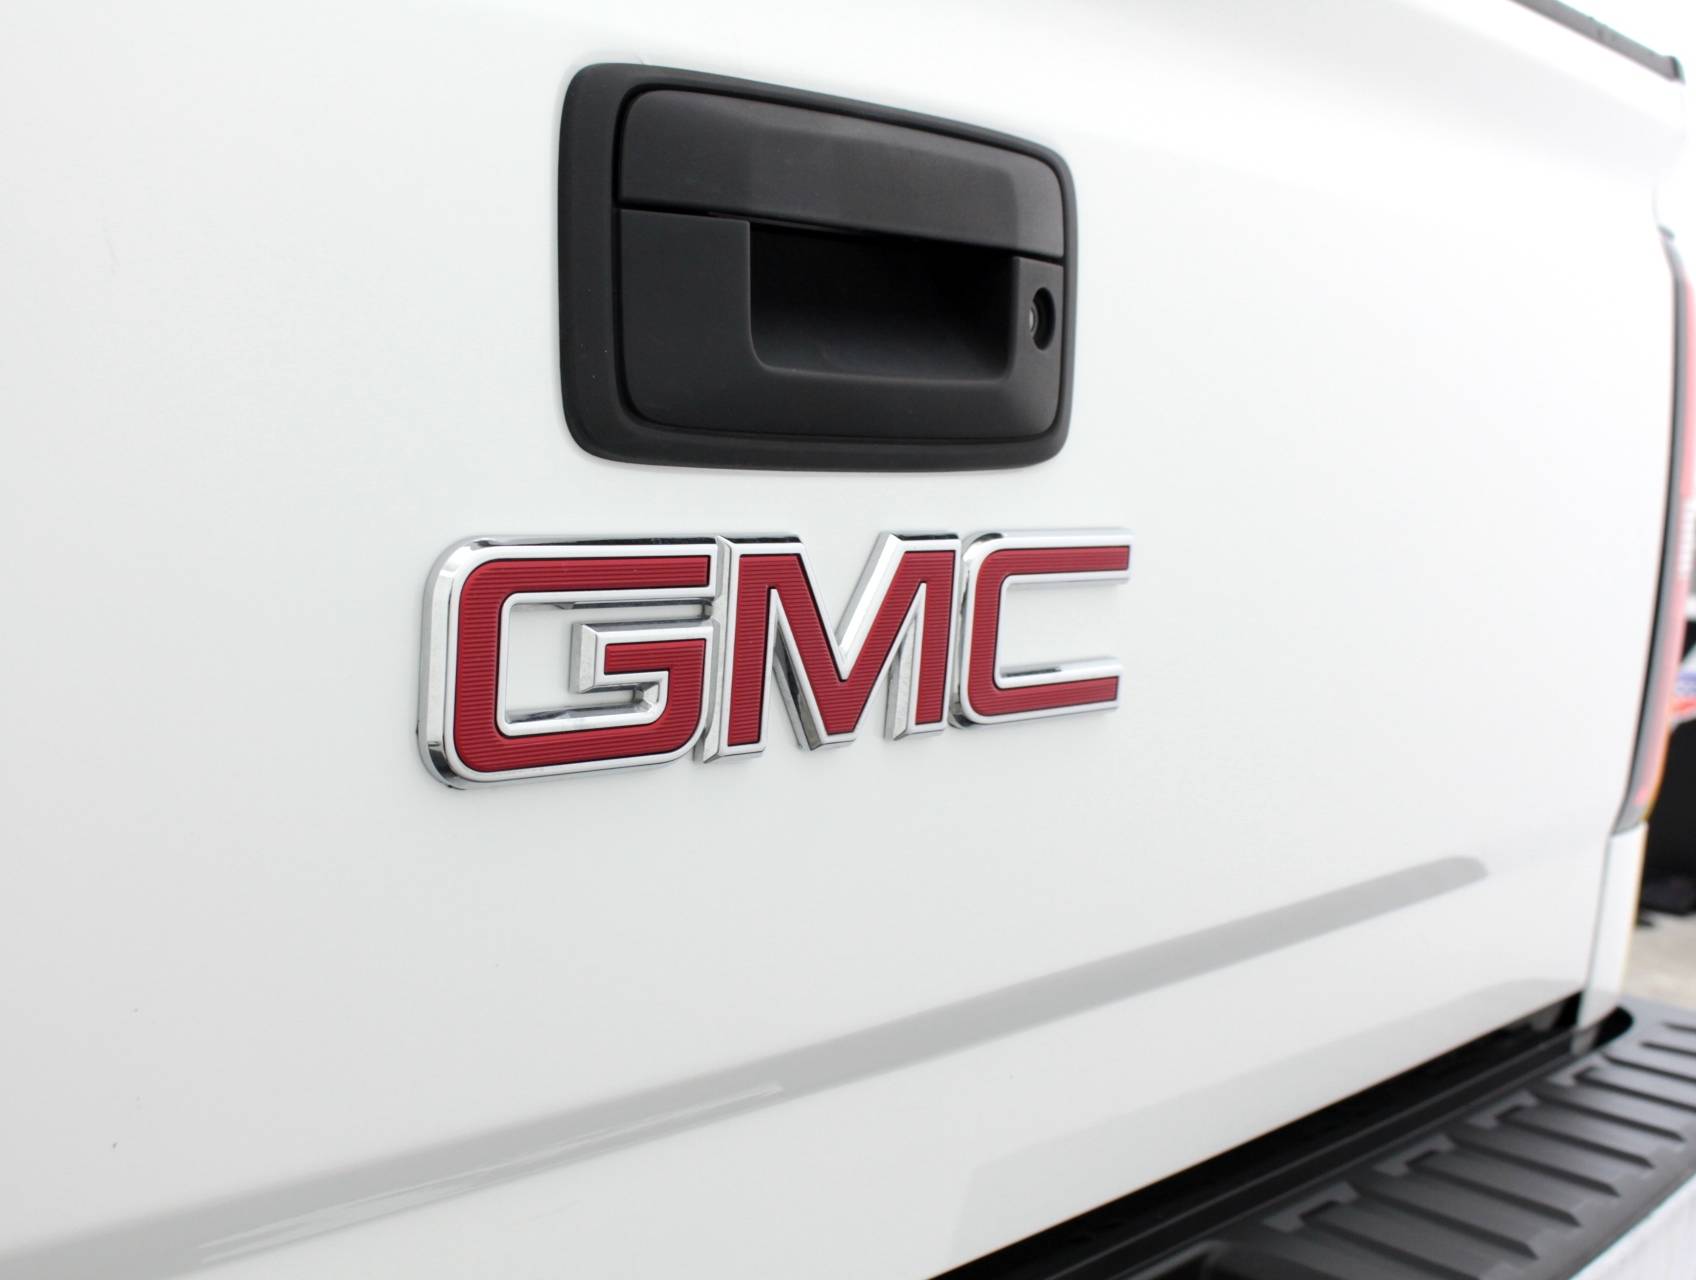 Florida Fine Cars - Used GMC SIERRA 2016 WEST PALM 1500